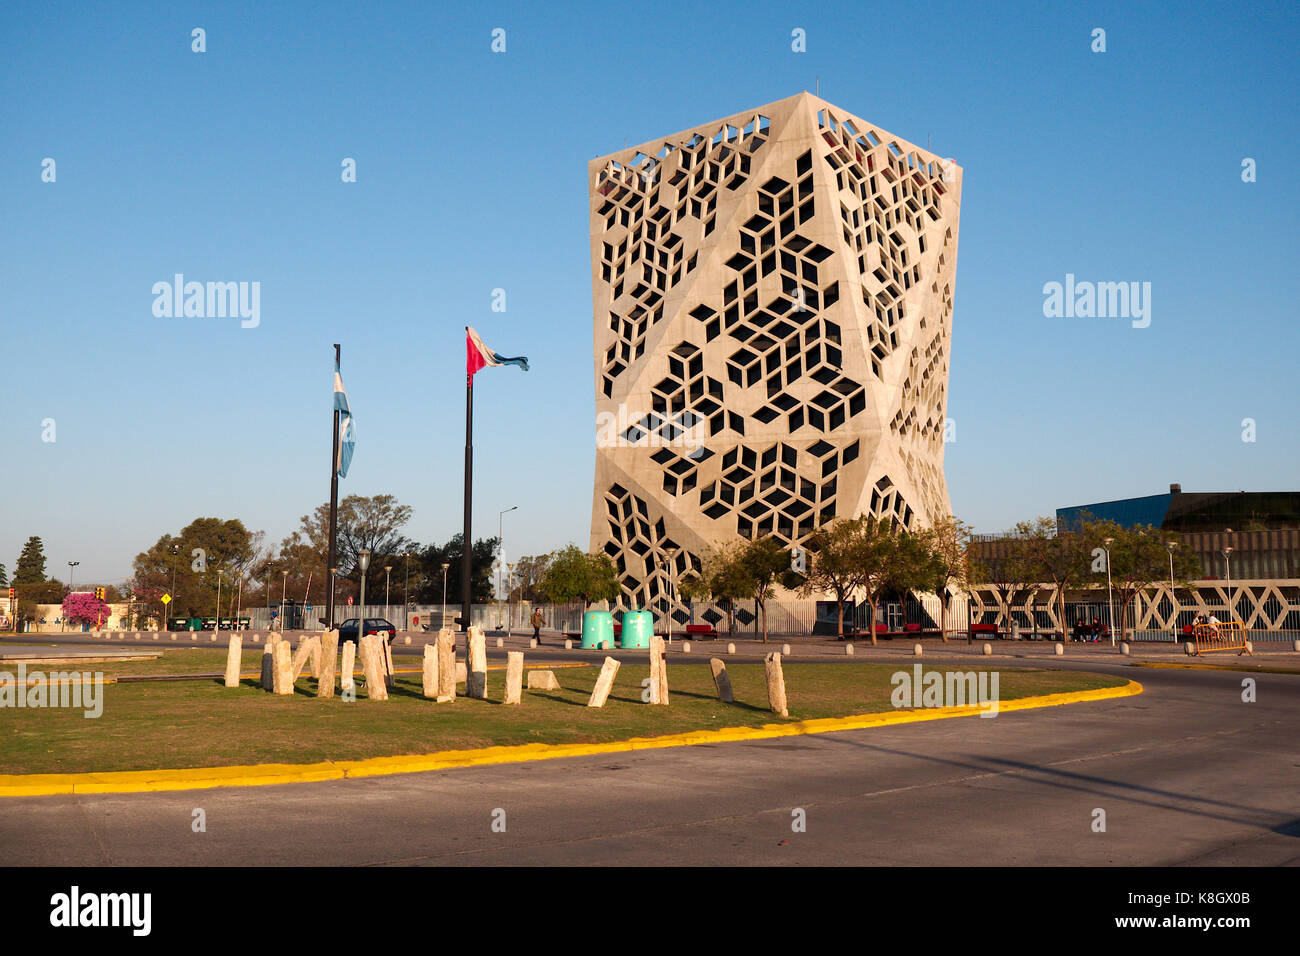 Cordoba, Argentinien - 2017: Blick auf das Centro Cívico del Bicentenario, oder das Bürgerzentrum. Stockfoto